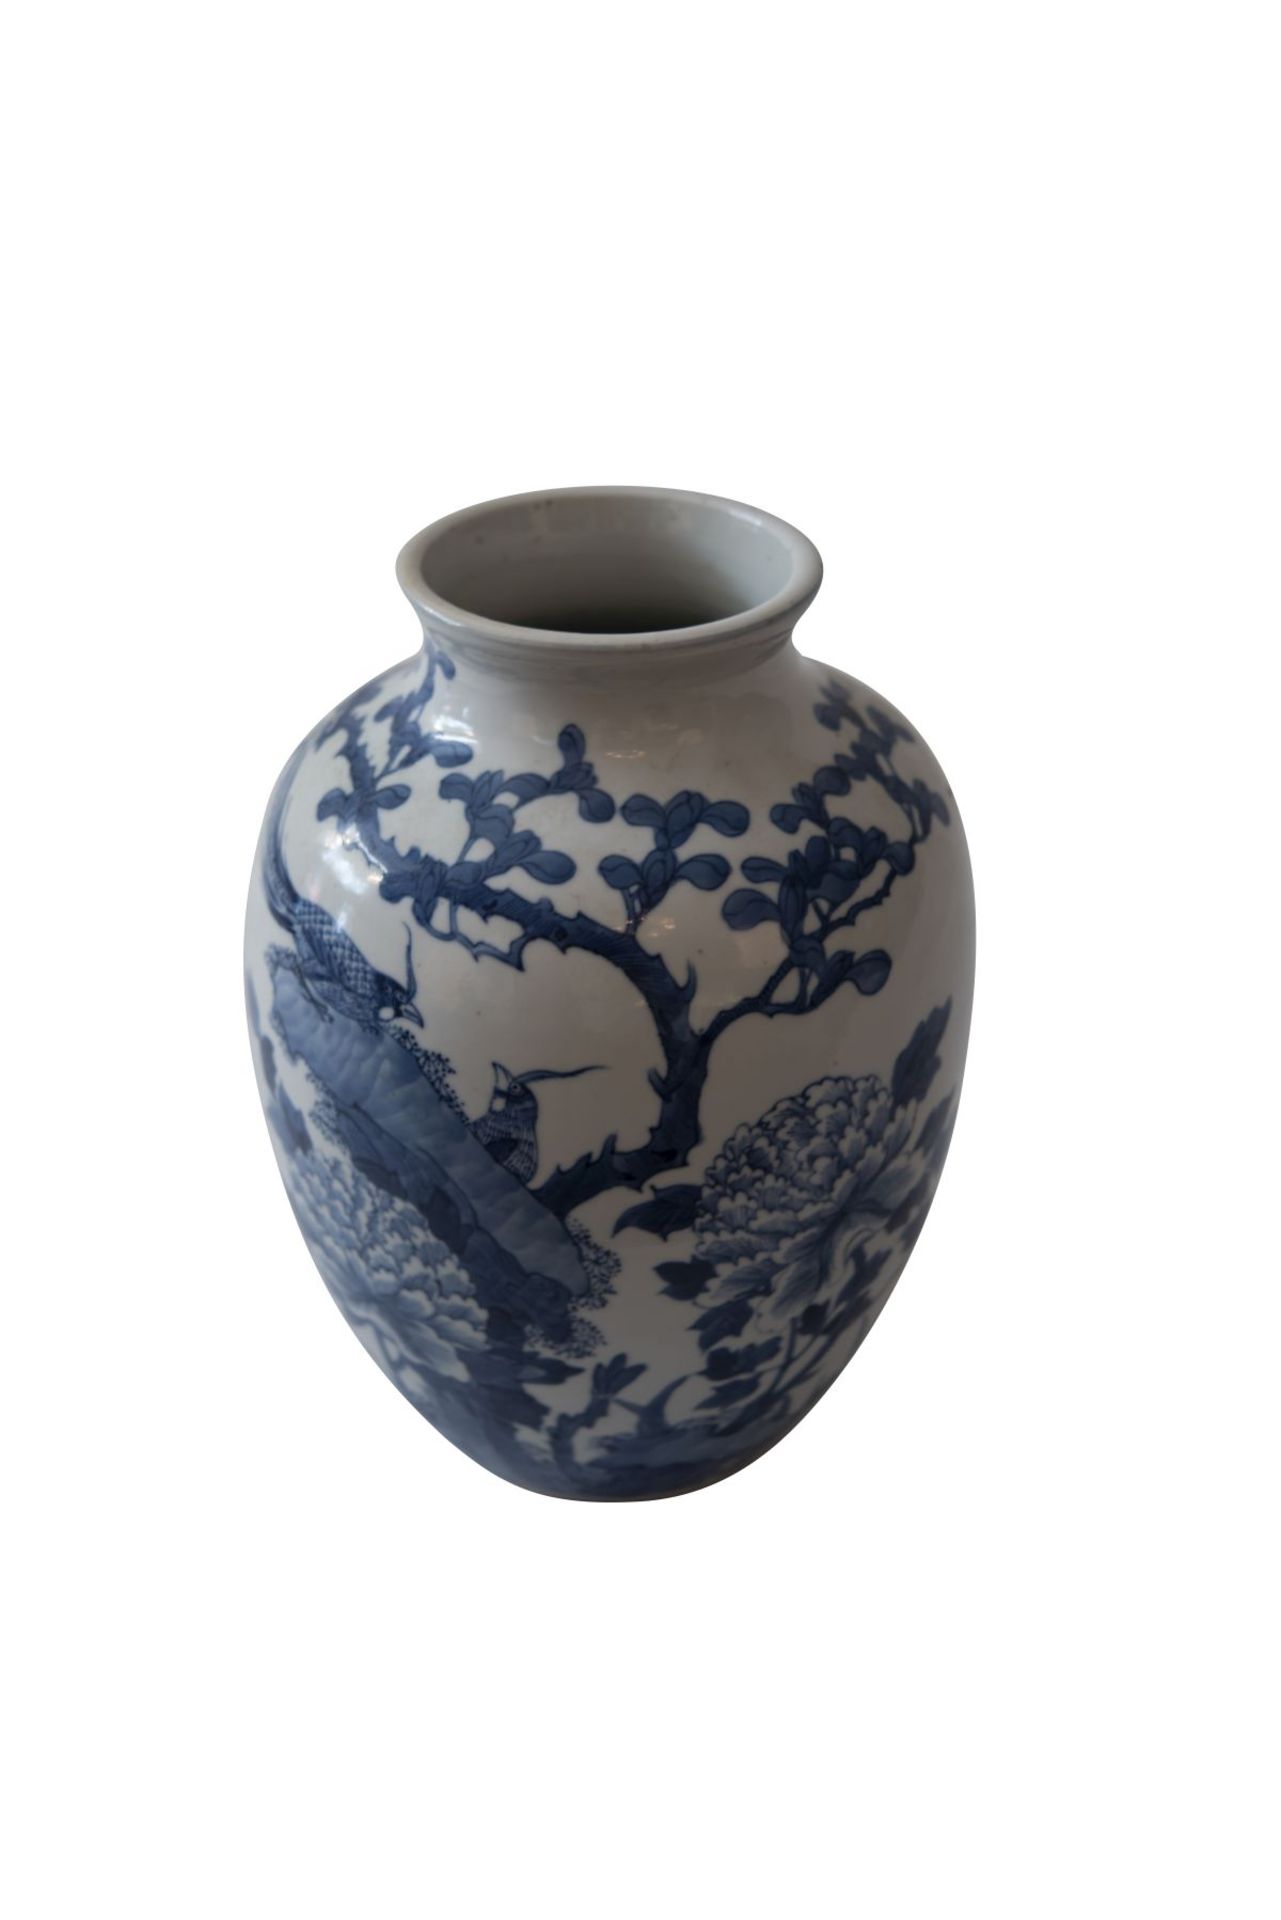 Blue and white vase - Image 2 of 8